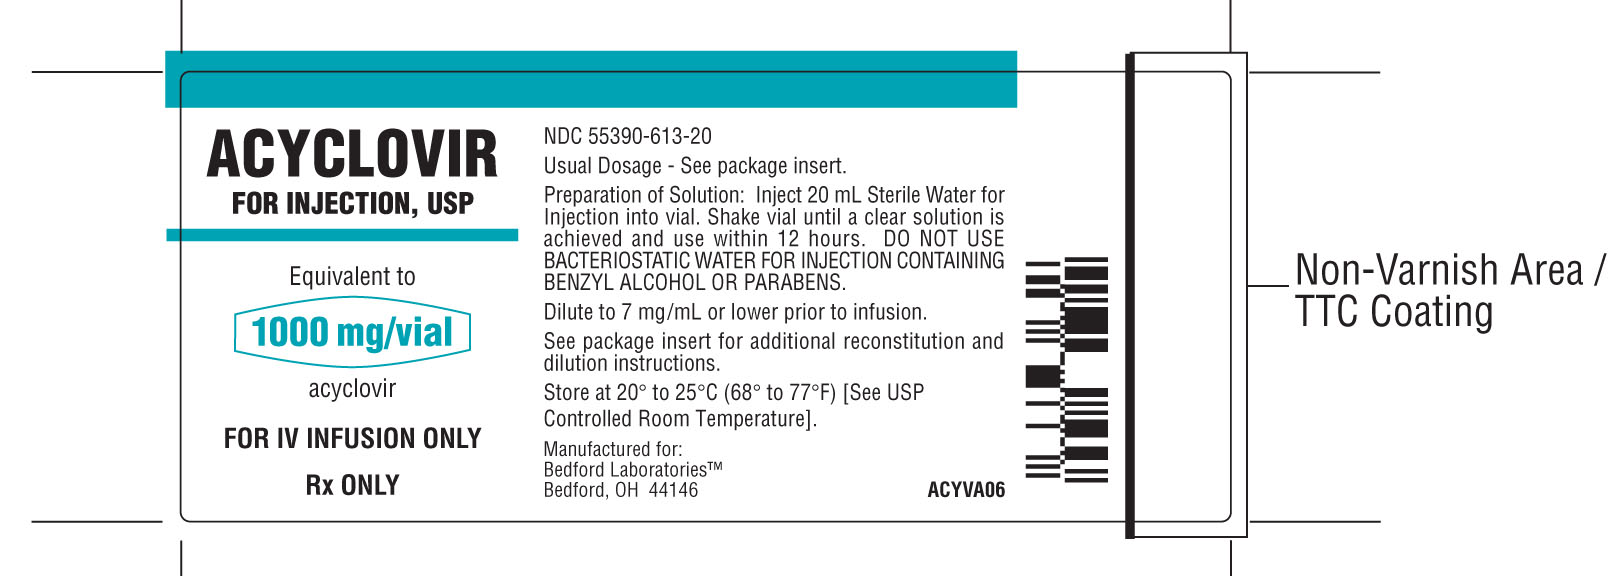 Vial label for Acyclovir for Injection USP 1000 mg/vial